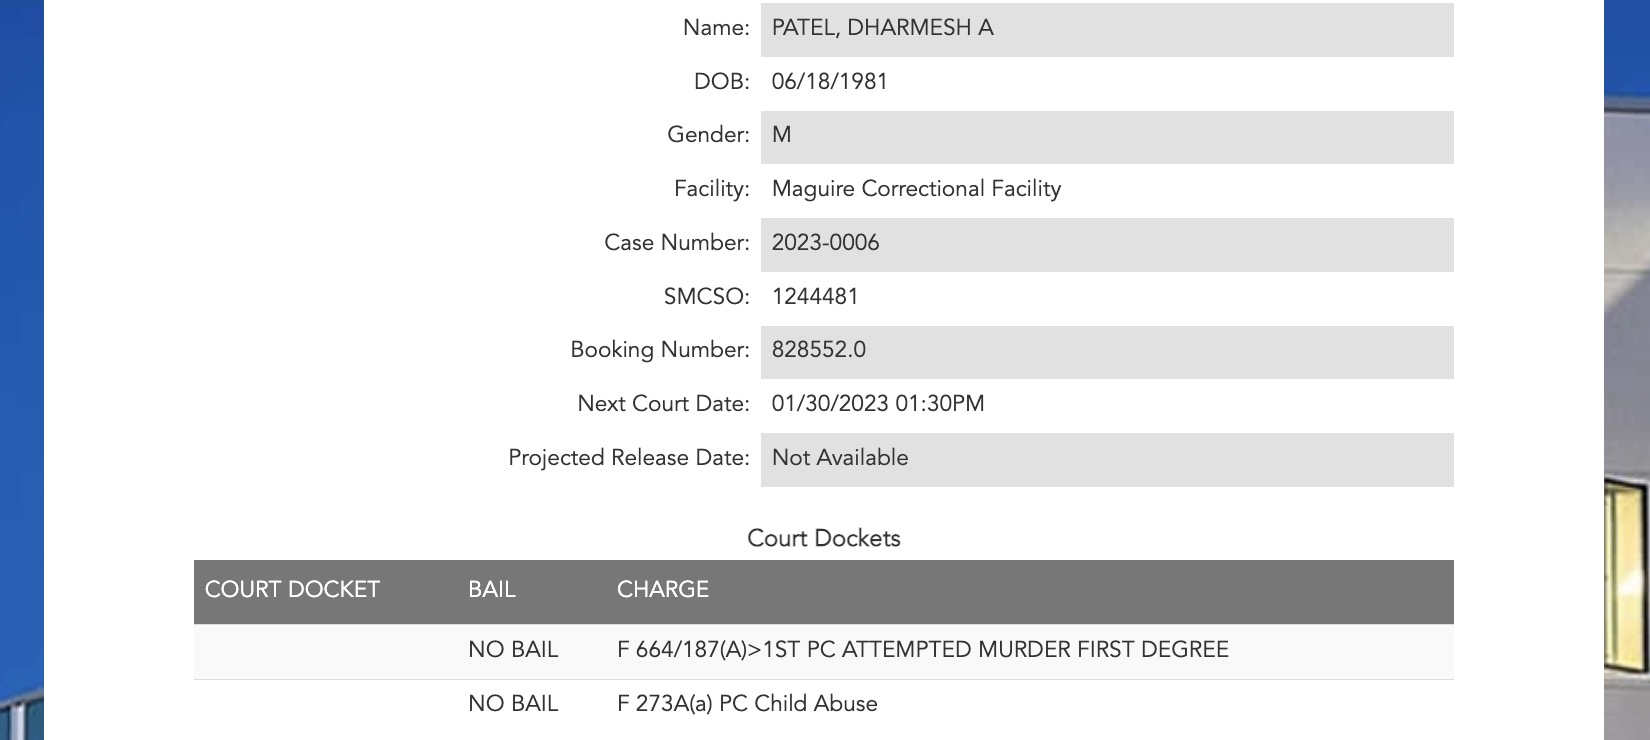 Dharmesh A. Patel inmate information